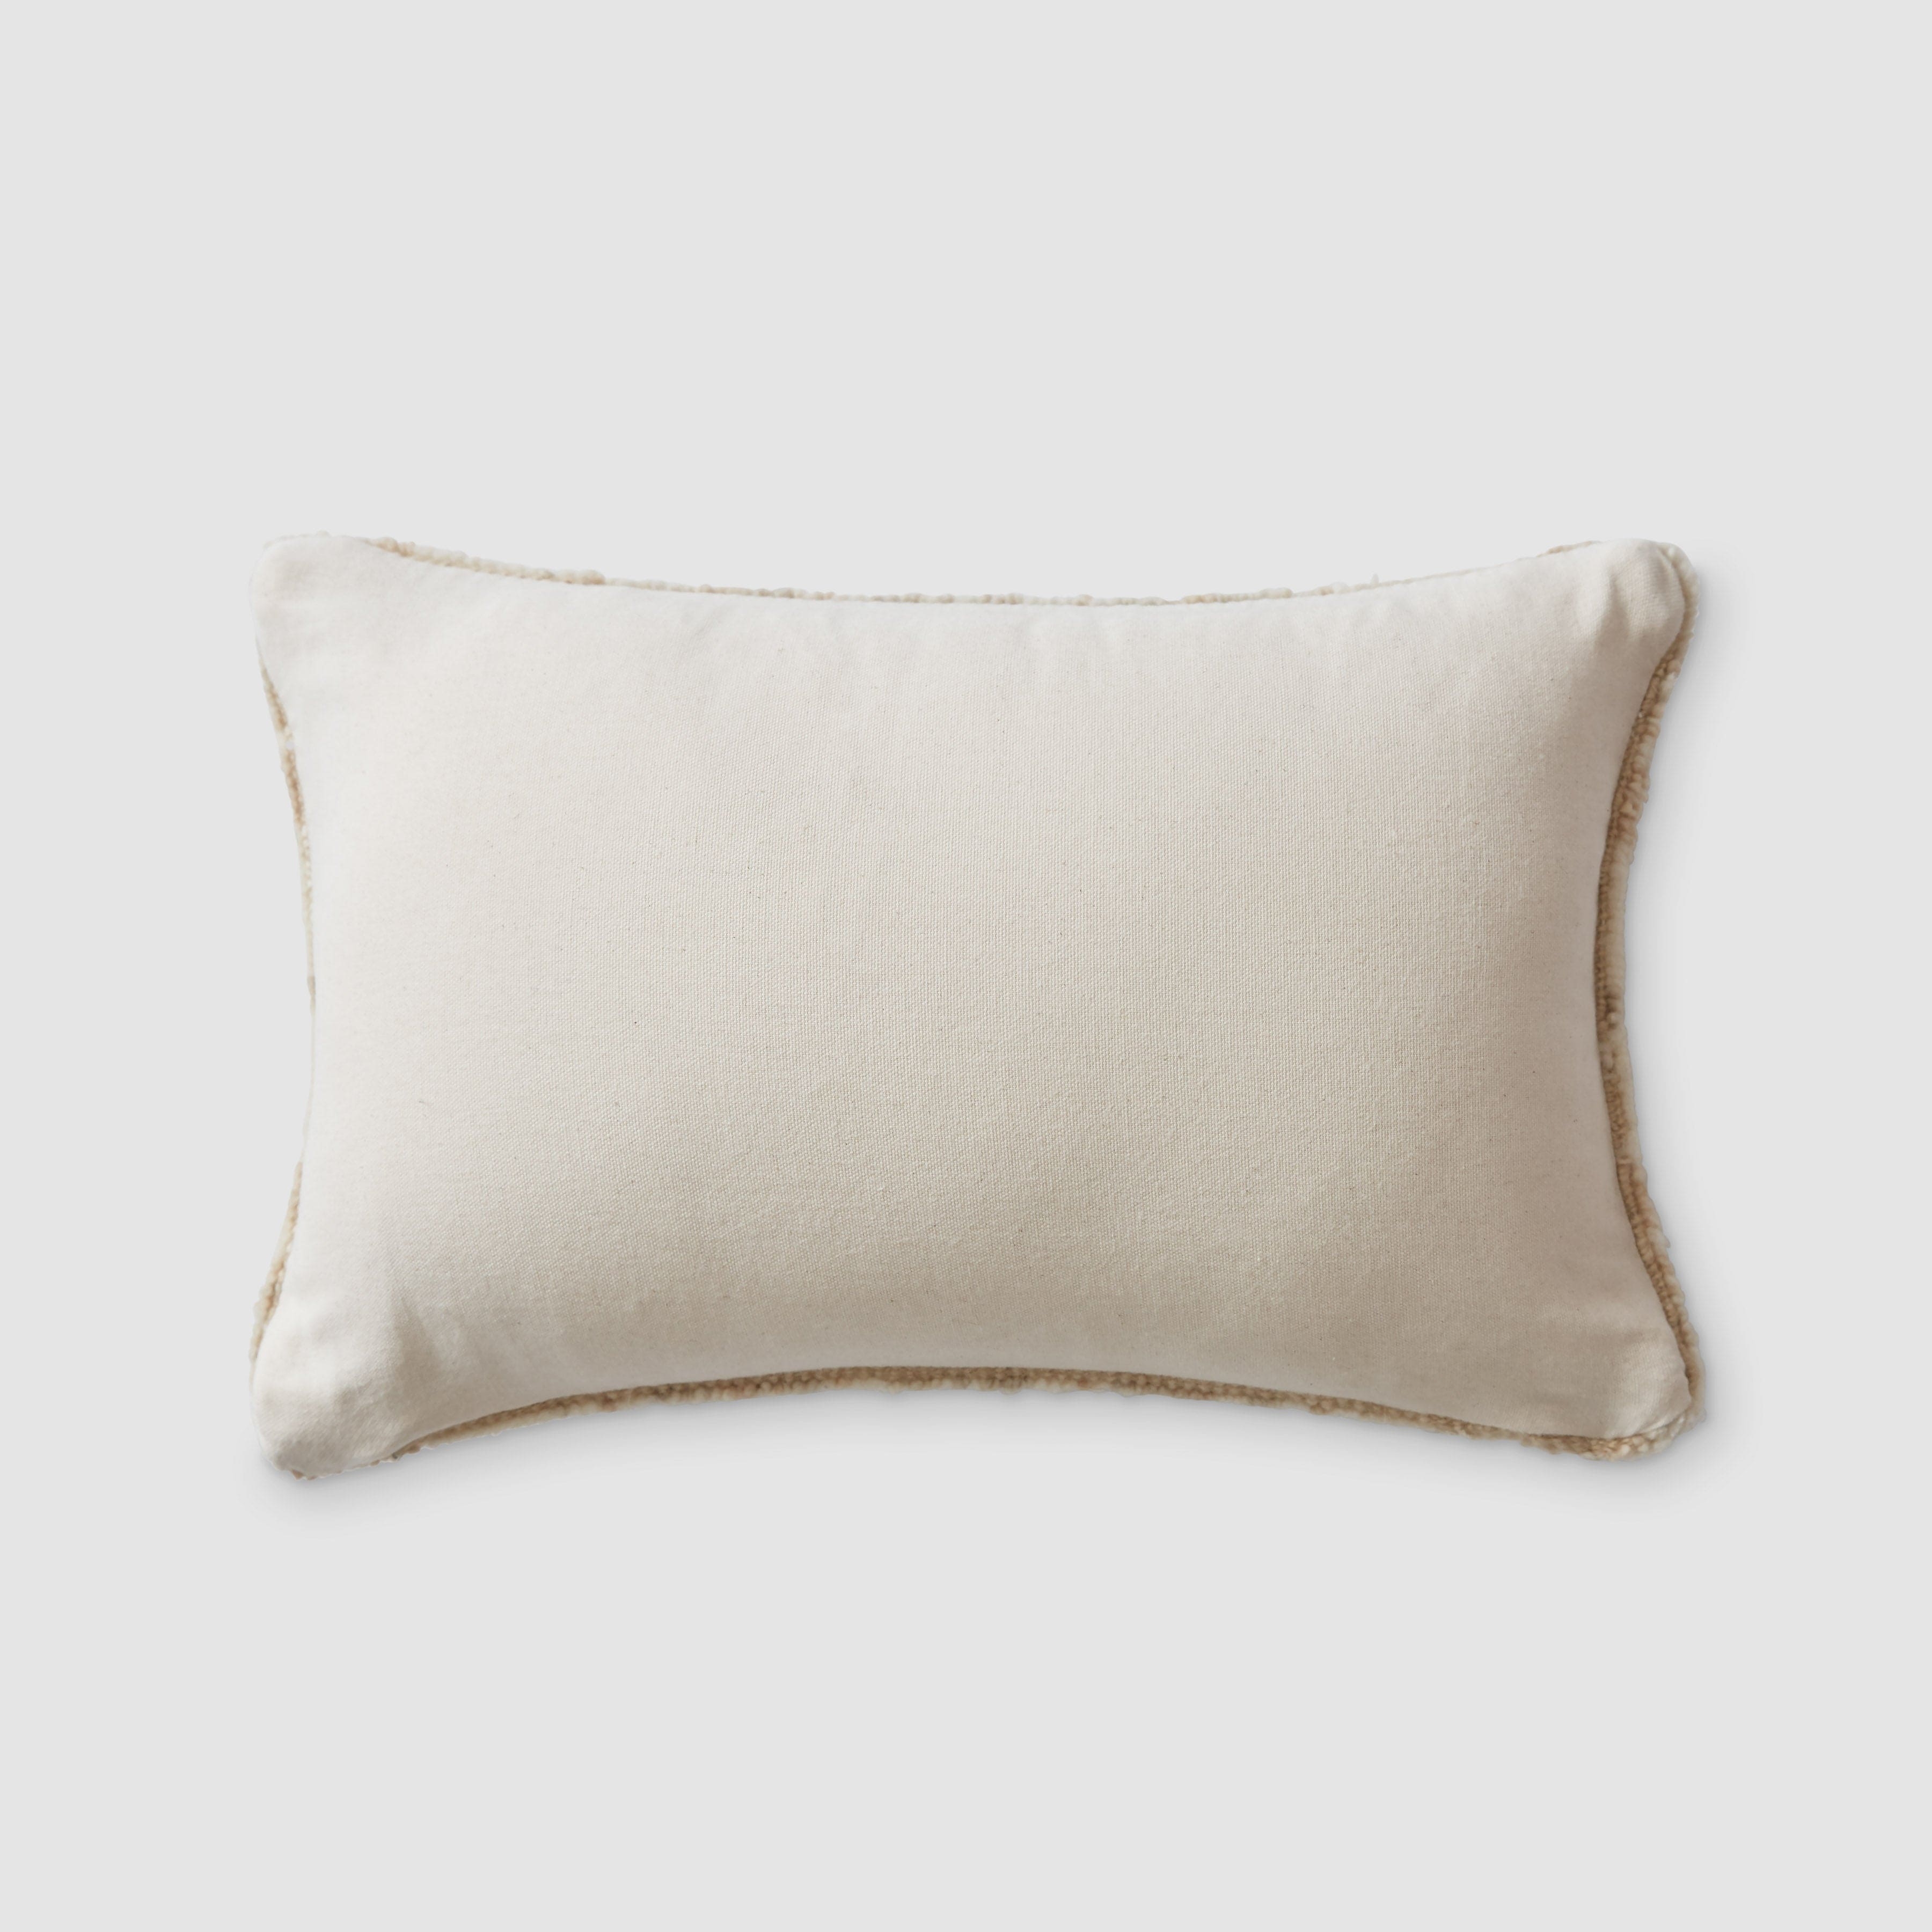 The Citizenry Akira Hand-Knotted Lumbar Pillow | 12" x 20" | Sand - Image 3